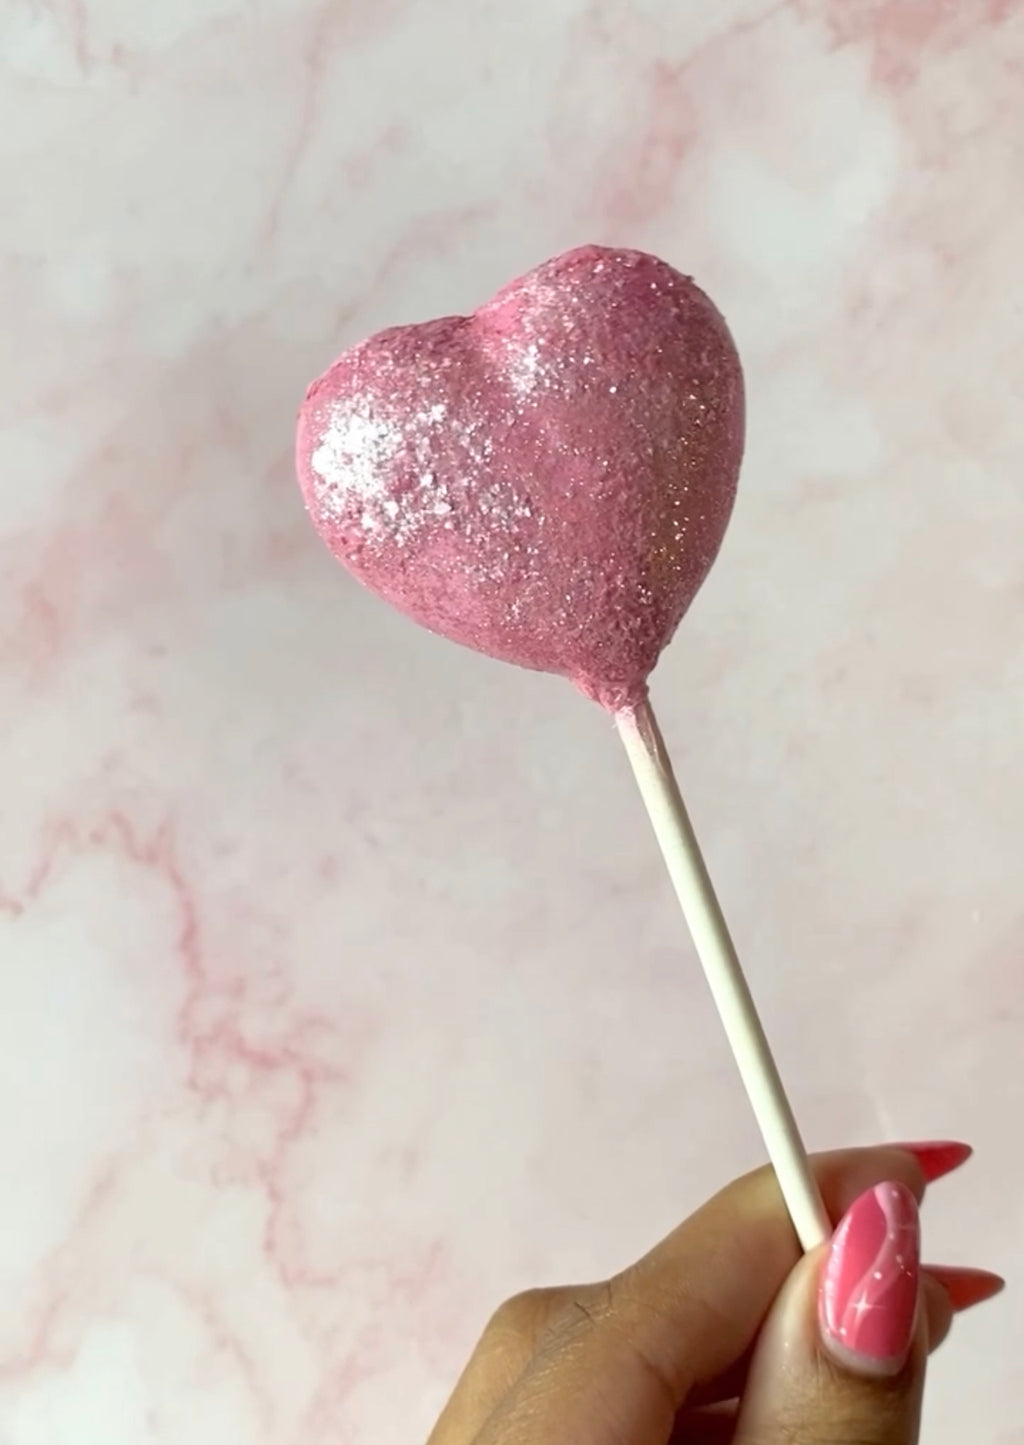  LIFETOOLS-LT Silicone Cake Pop Mold, Love Heart Petals